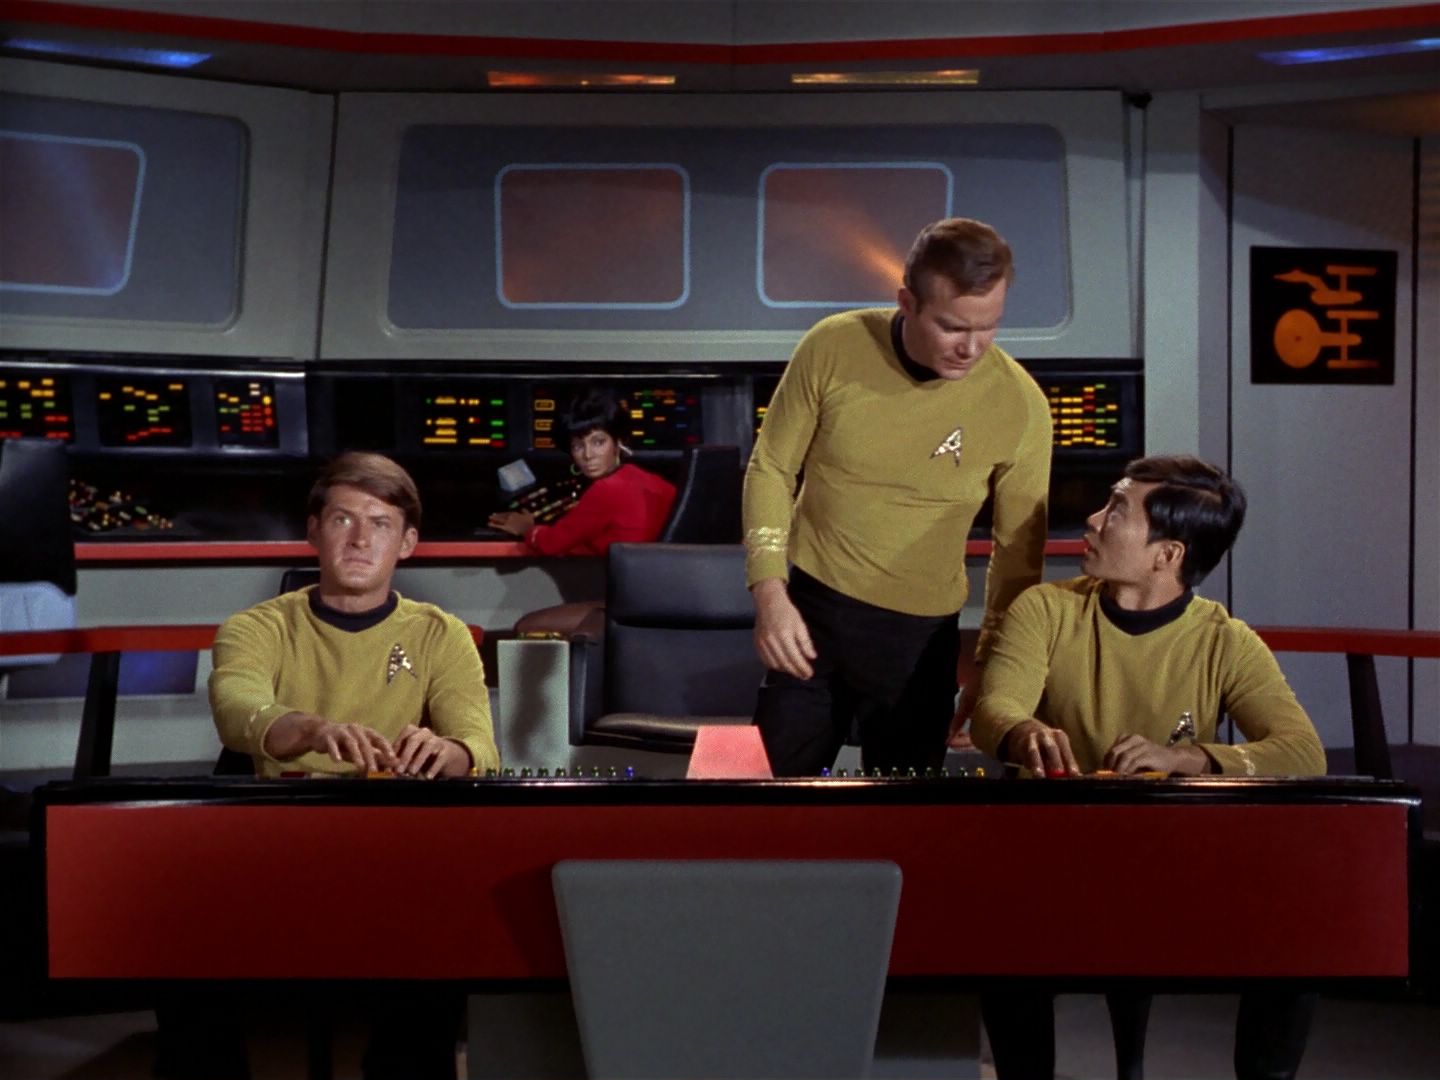 The Naked Time (S1:E4) Star Trek: The Original Series 